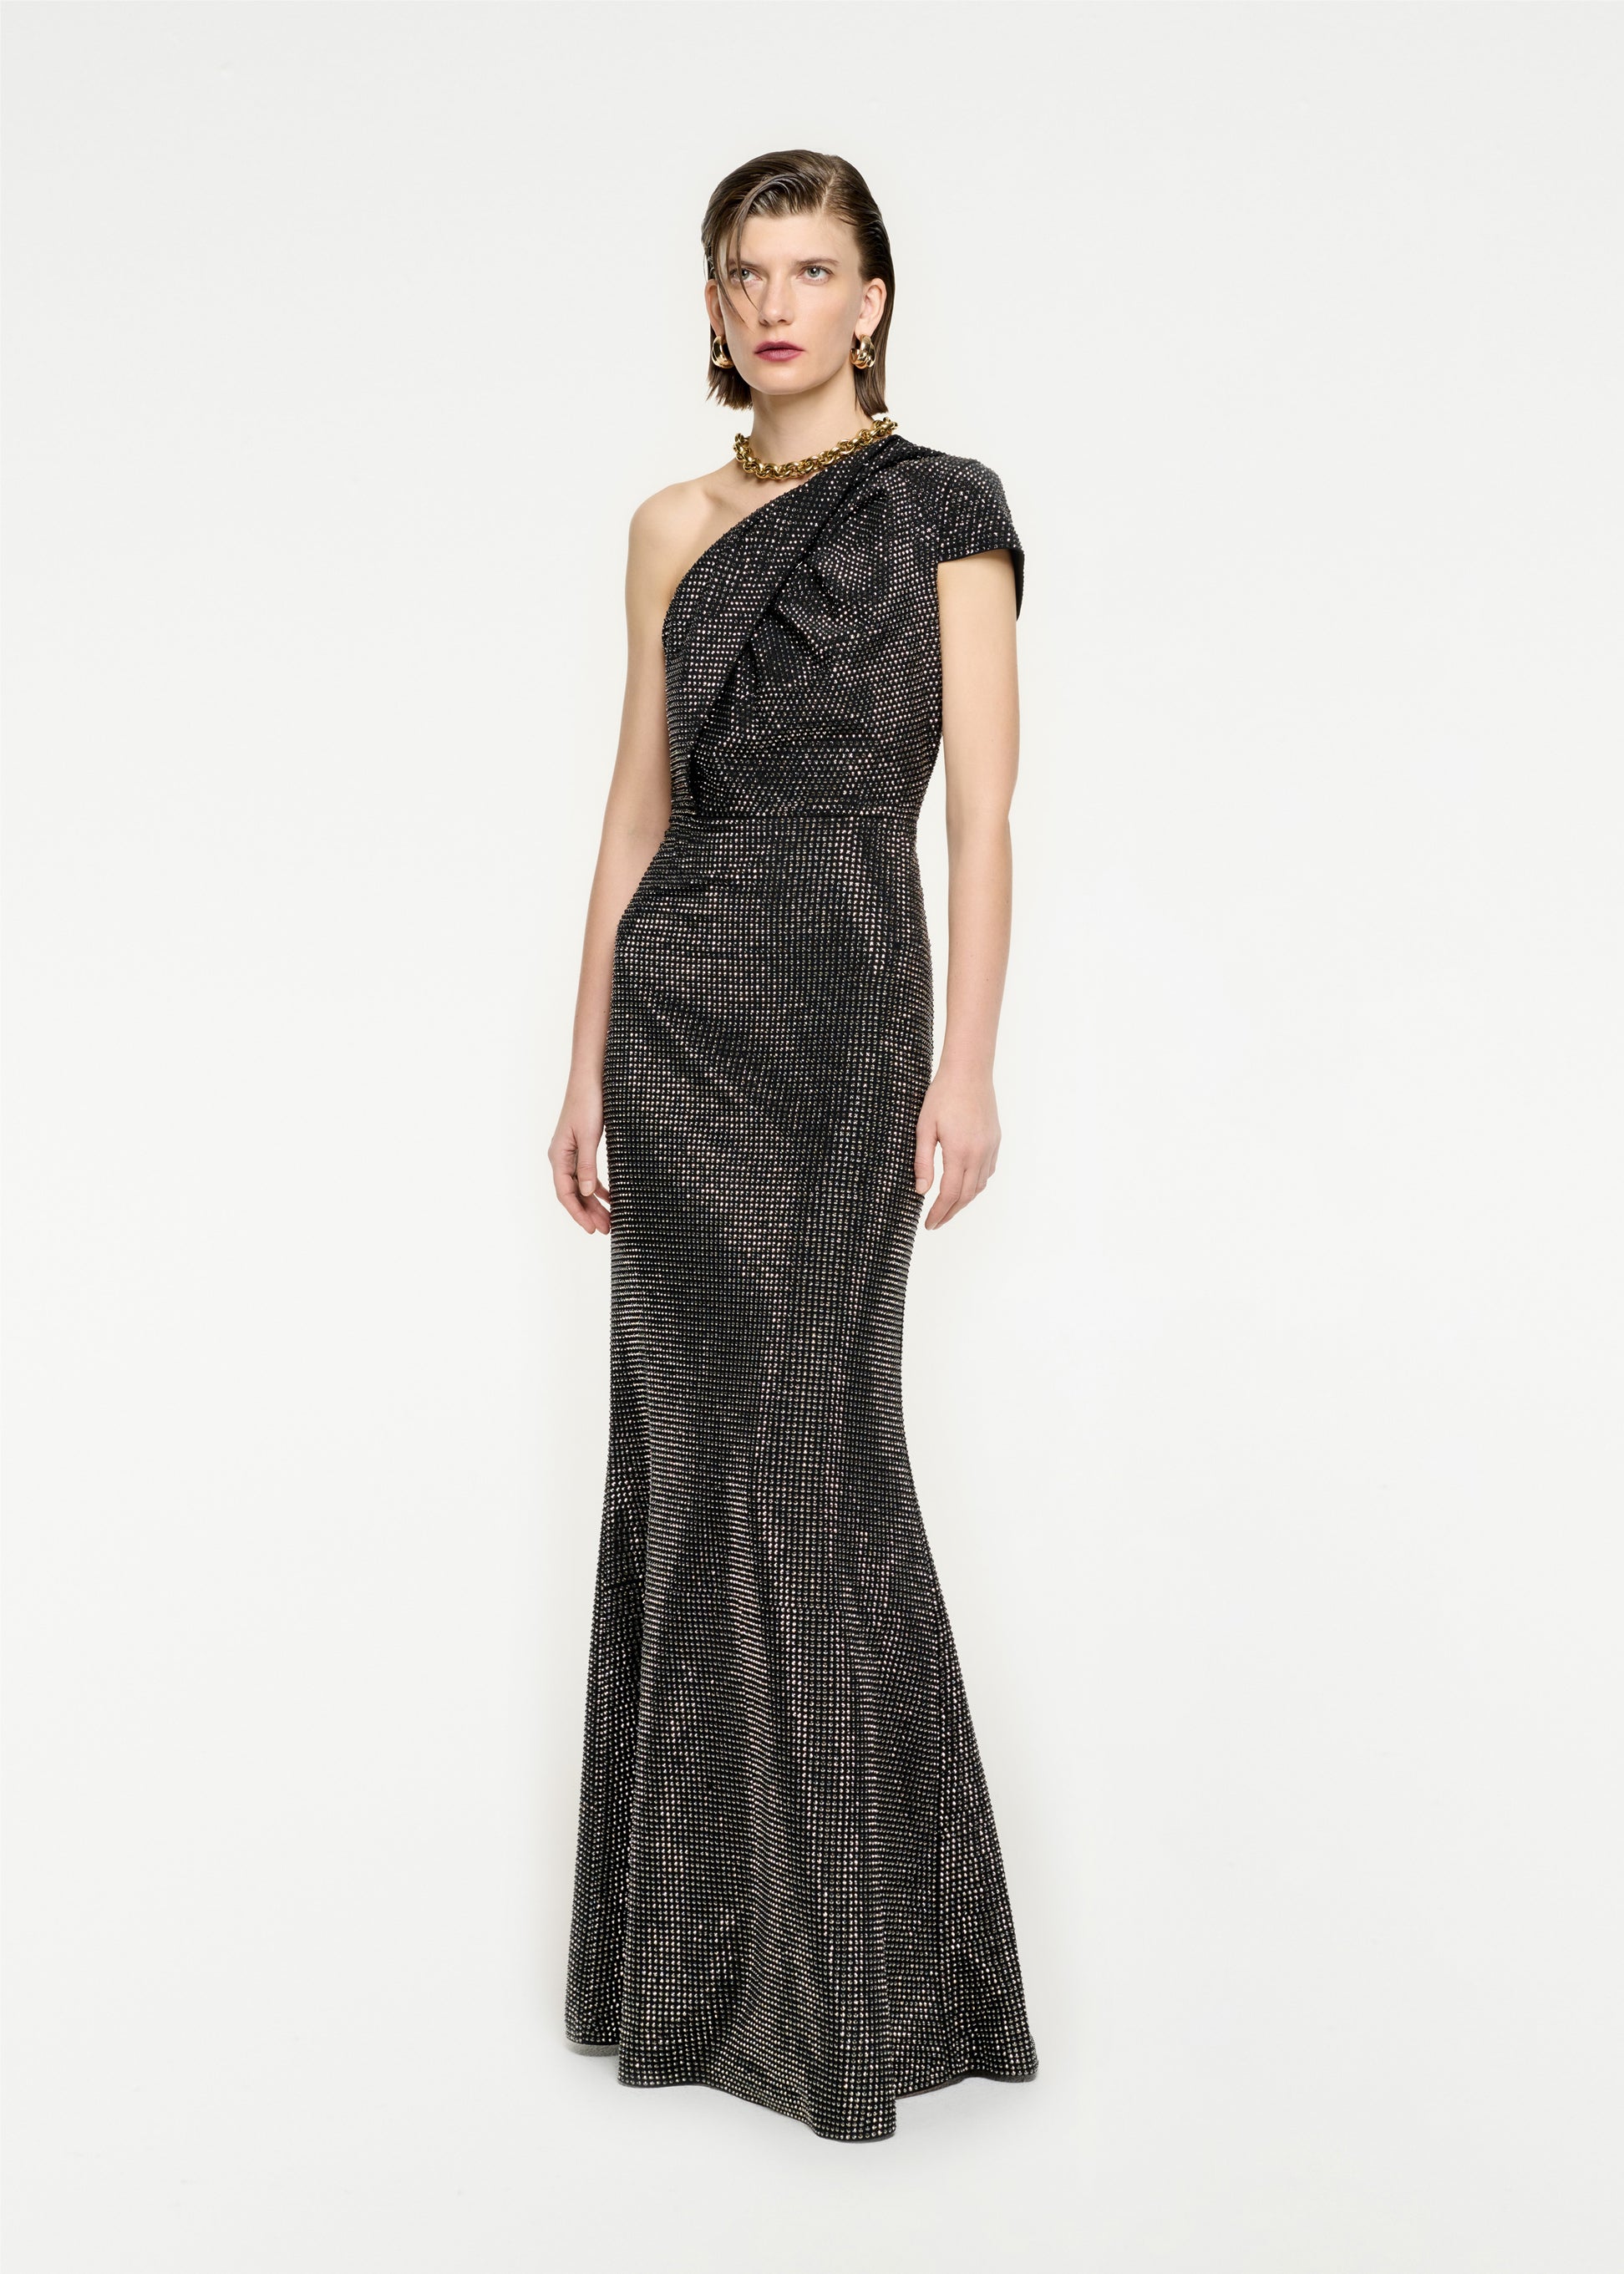 Woman wearing the Asymmetric Diamante Maxi Dress in Black